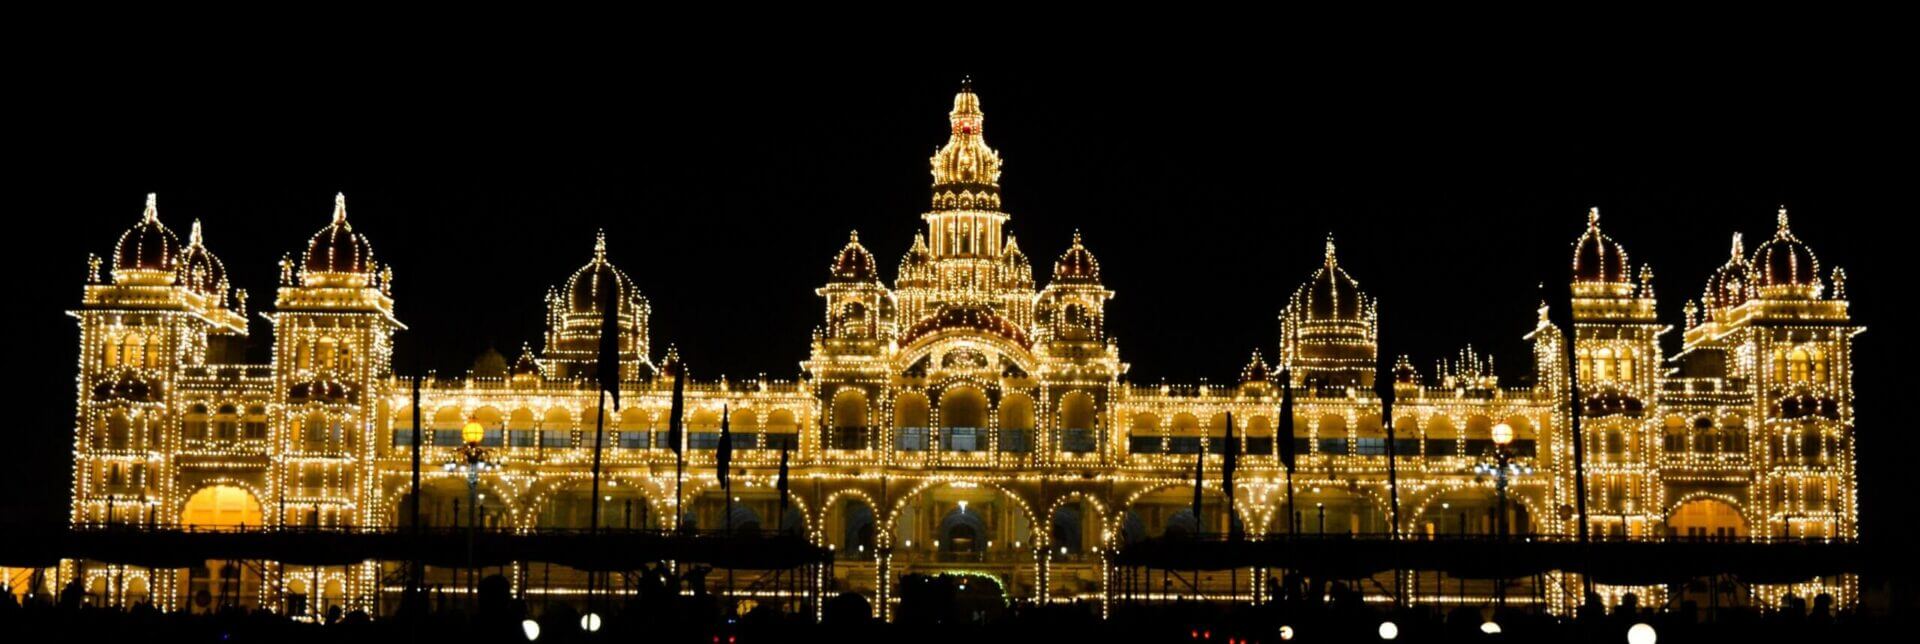 Mysore_Palace_in_night